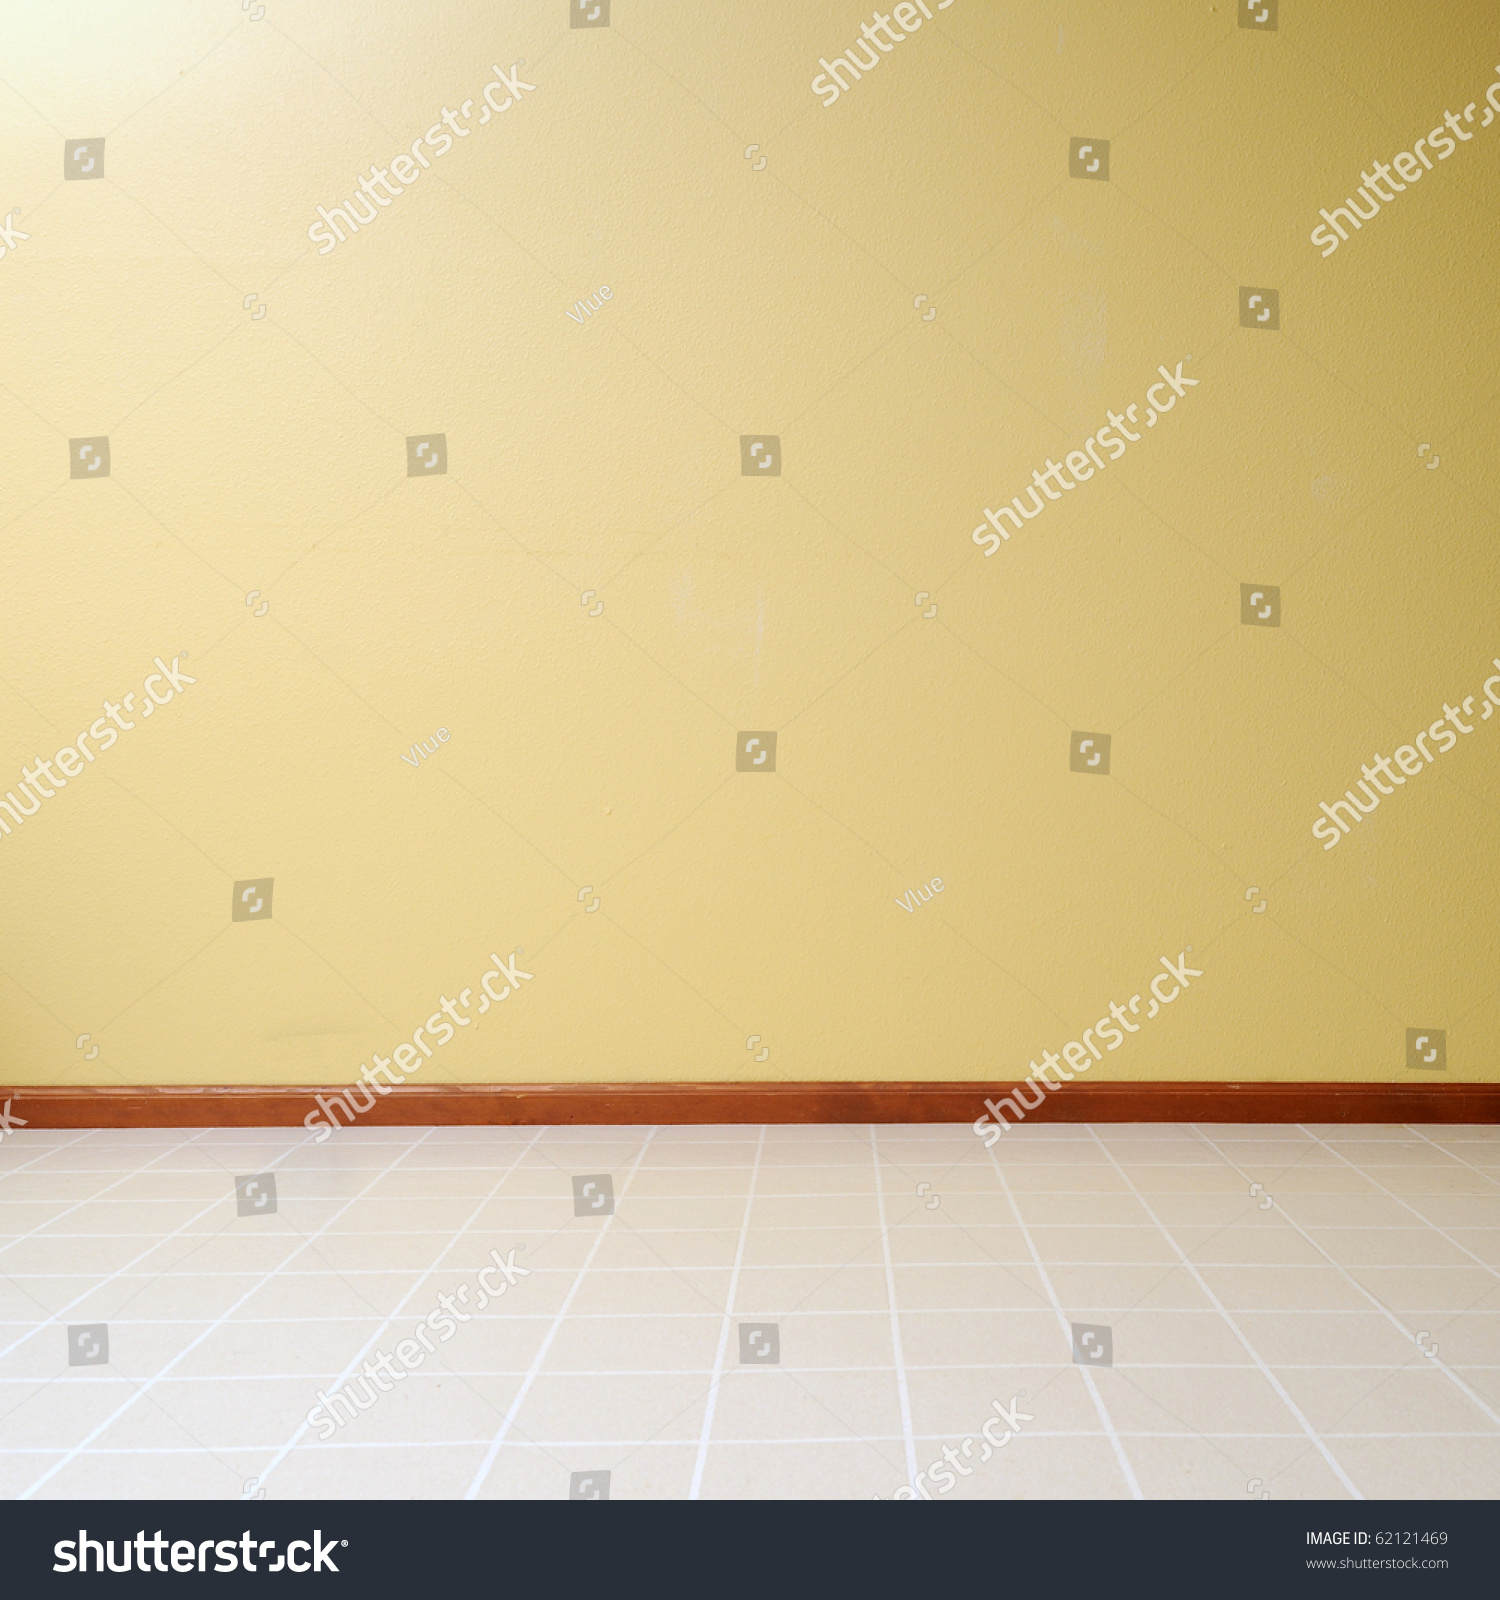 Empty Room Linoleum Floor Yellow Painted Stock Photo 62121469 ...